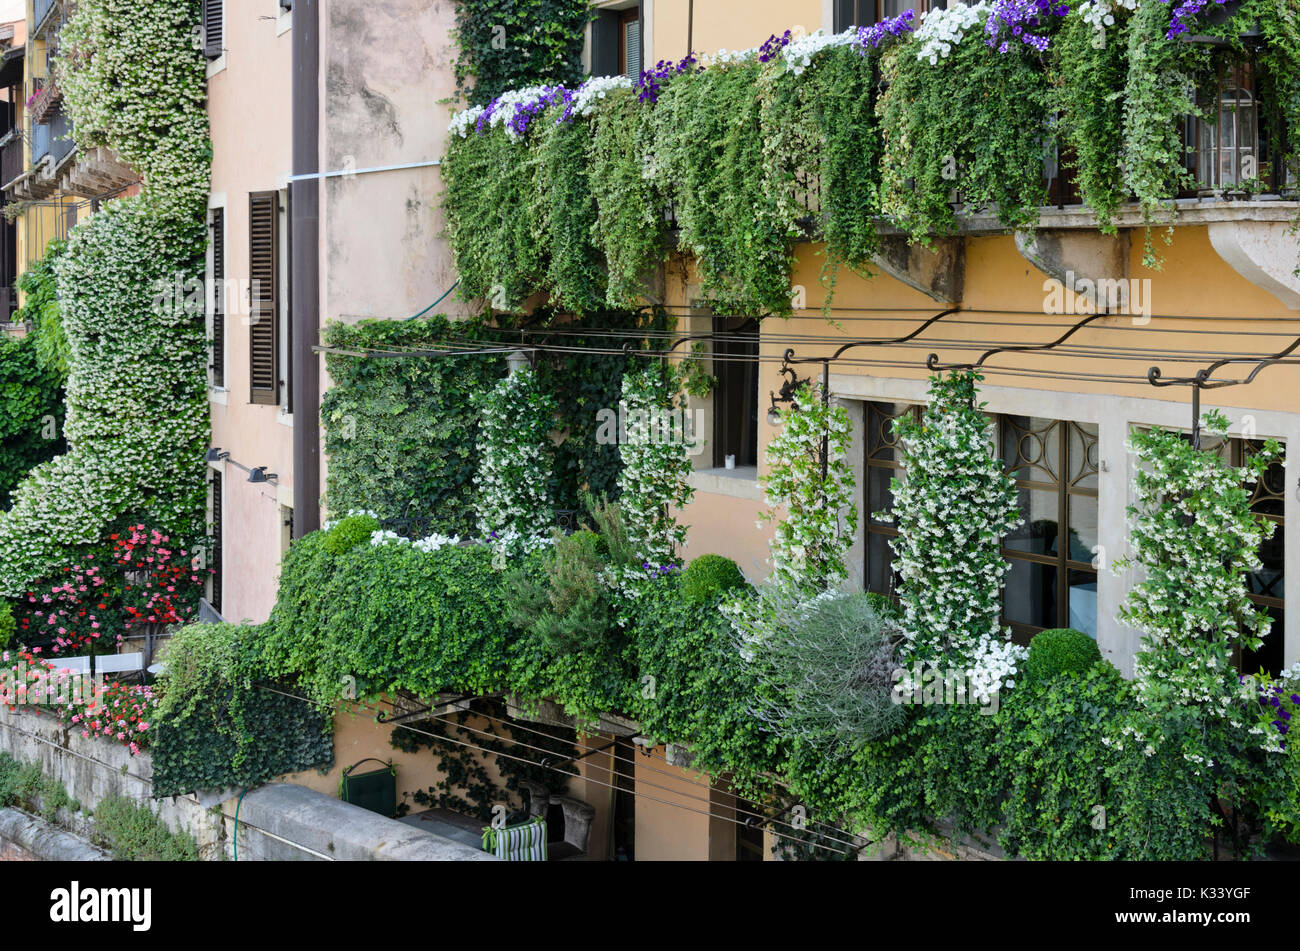 Balconies with star jasmines (Trachelospermum), petunias (Petunia) and pelargoniums (Pelargonium), Verona, Italy Stock Photo